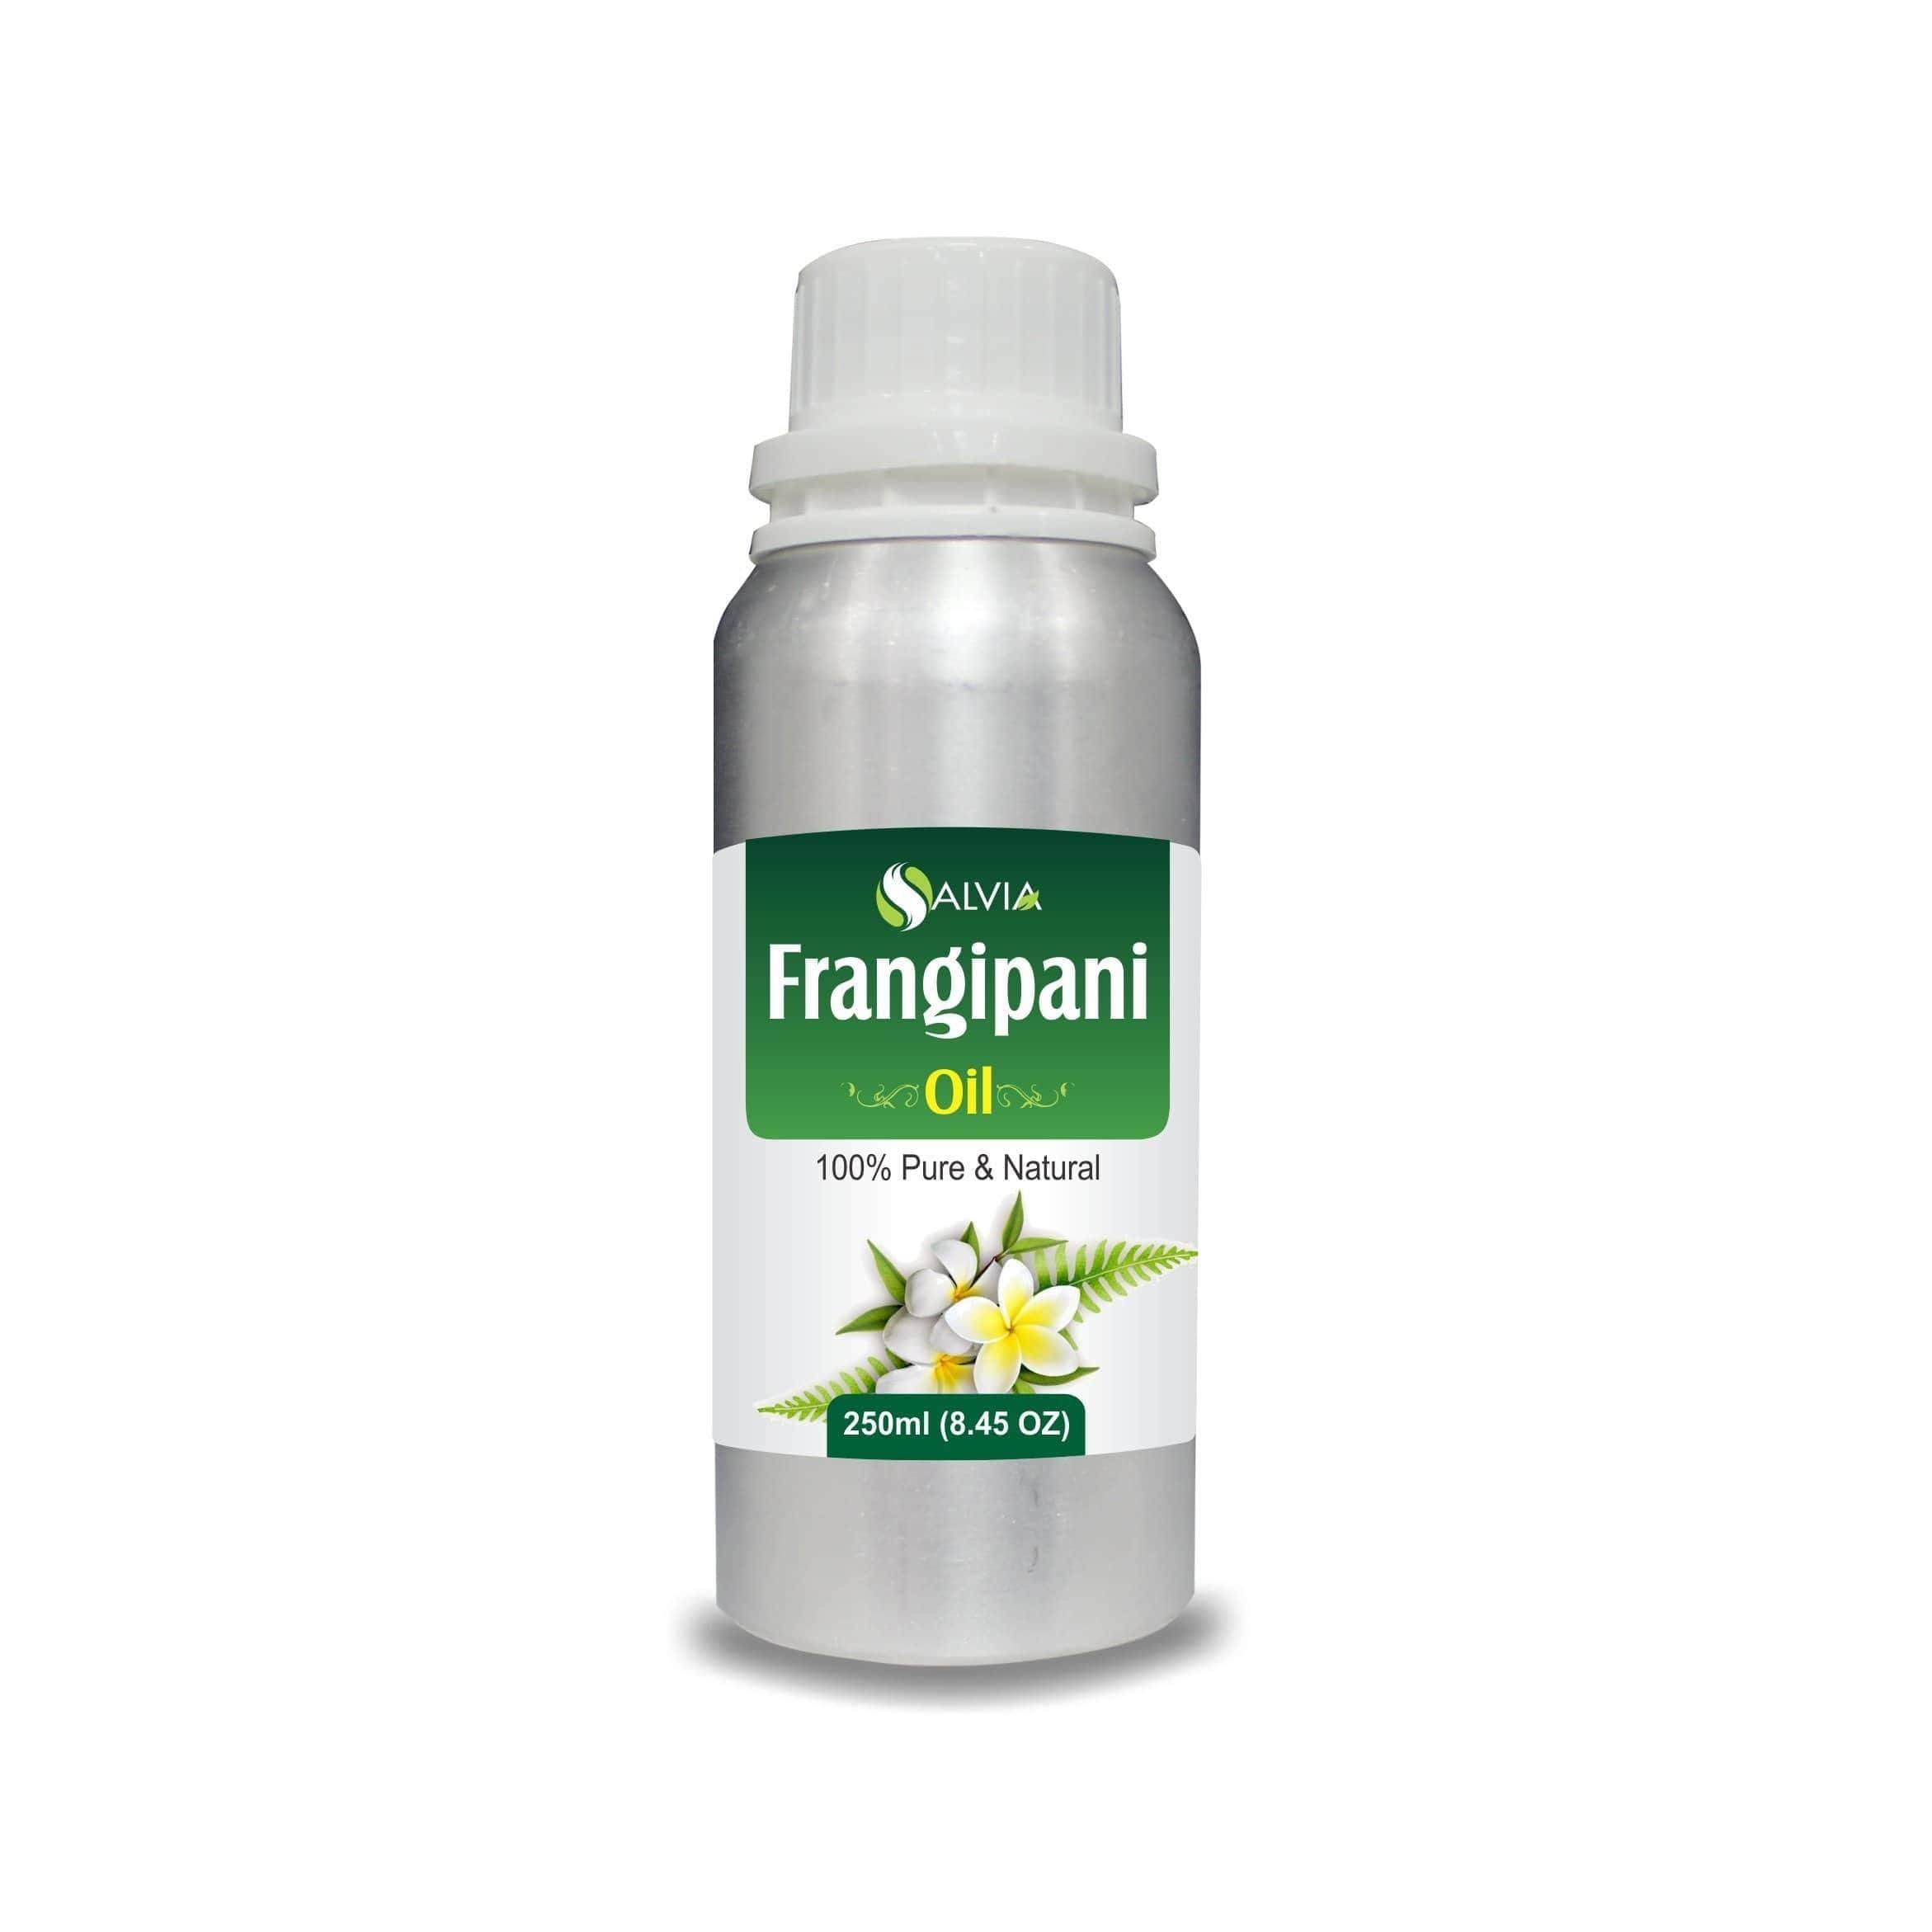 frangipani oil uses on skin